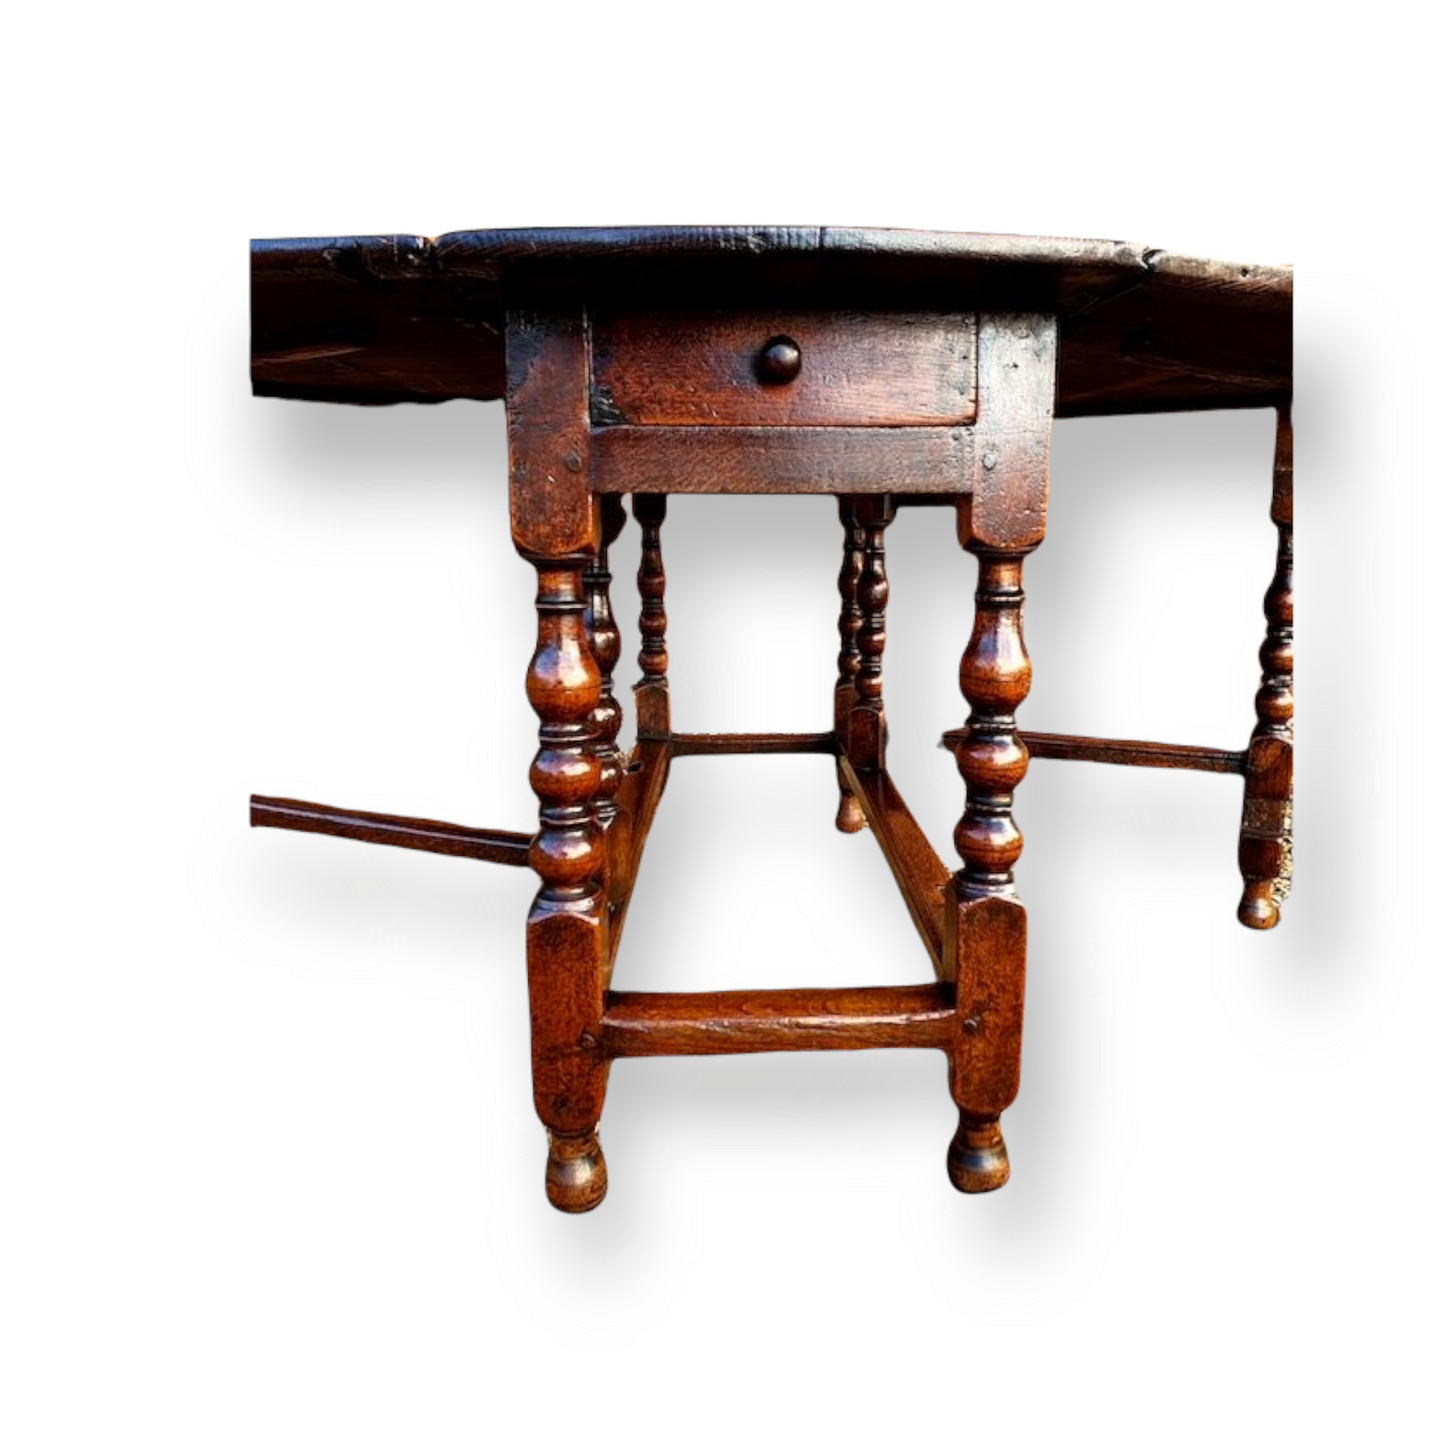 A Well-Patinated Late 17th Century English Antique Walnut, Elm & Oak Gateleg Table, Circa 1680